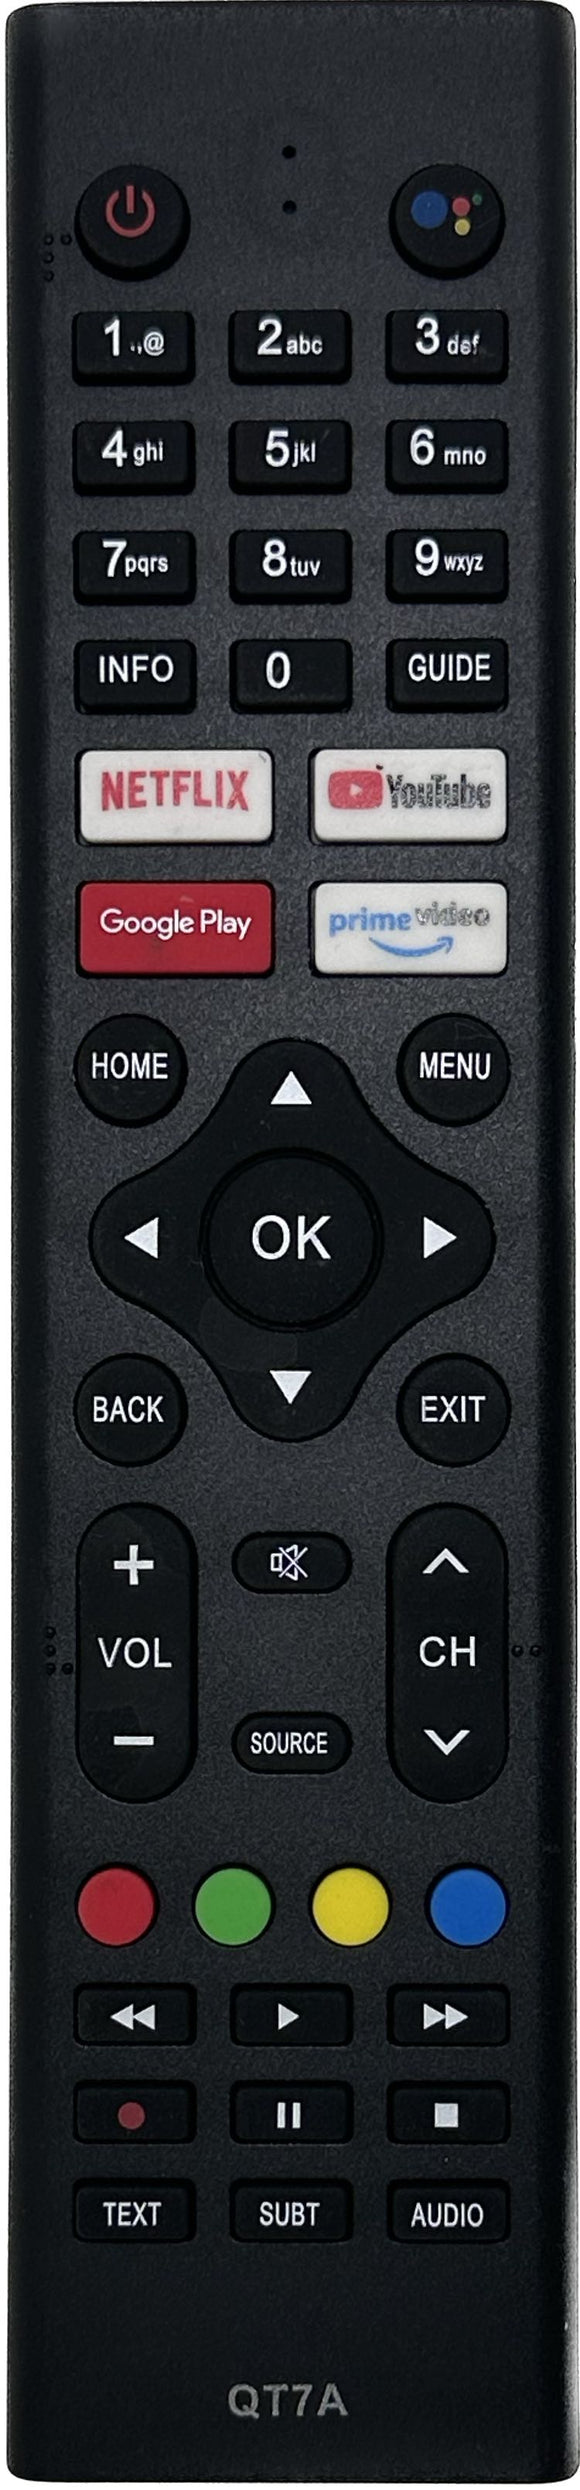 Soniq G42FW60A Smart Android TV Replacement Remote Control